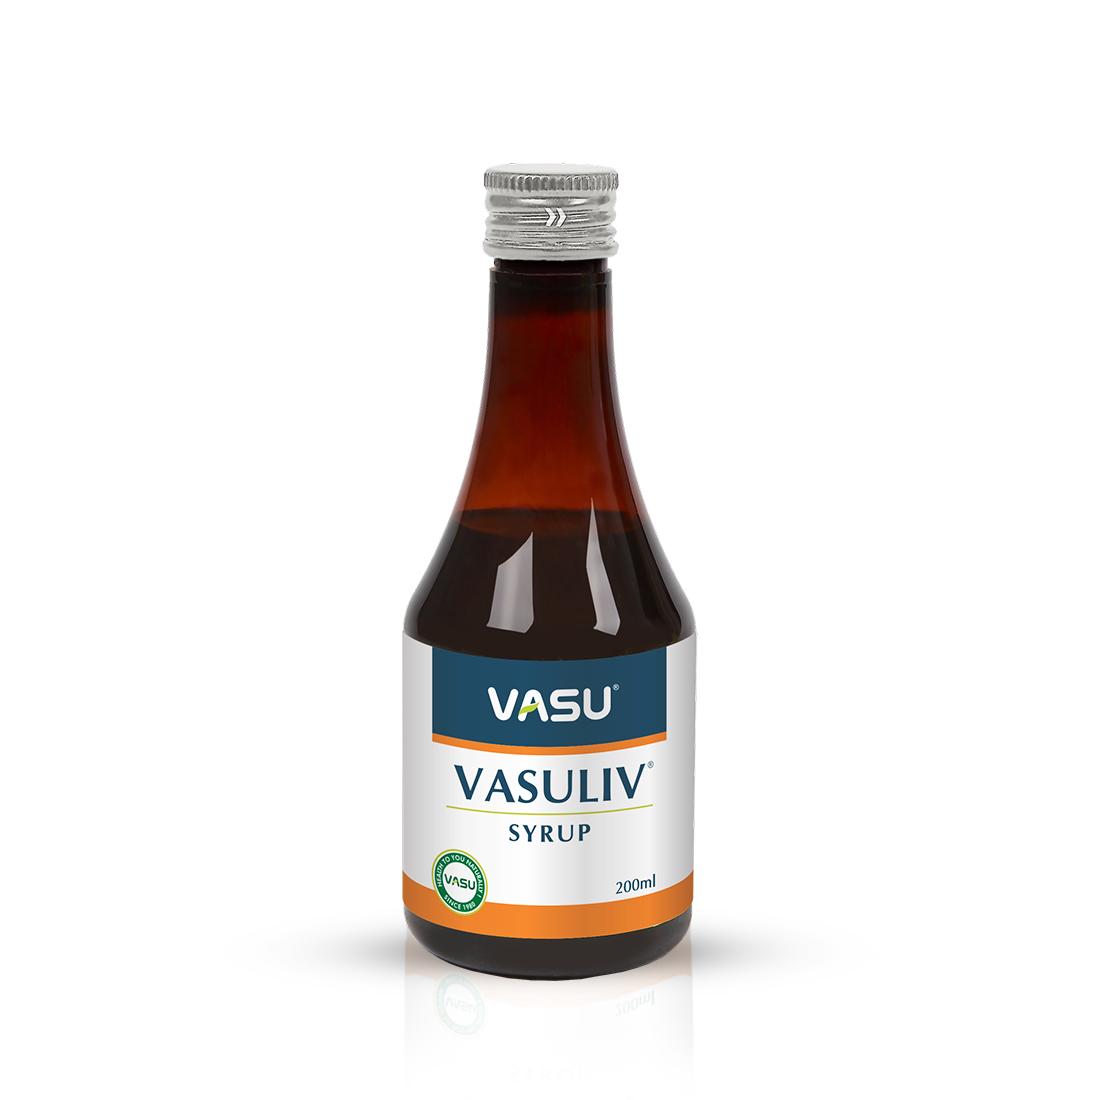 Buy Vasu Vasuliv Syrup at Best Price Online